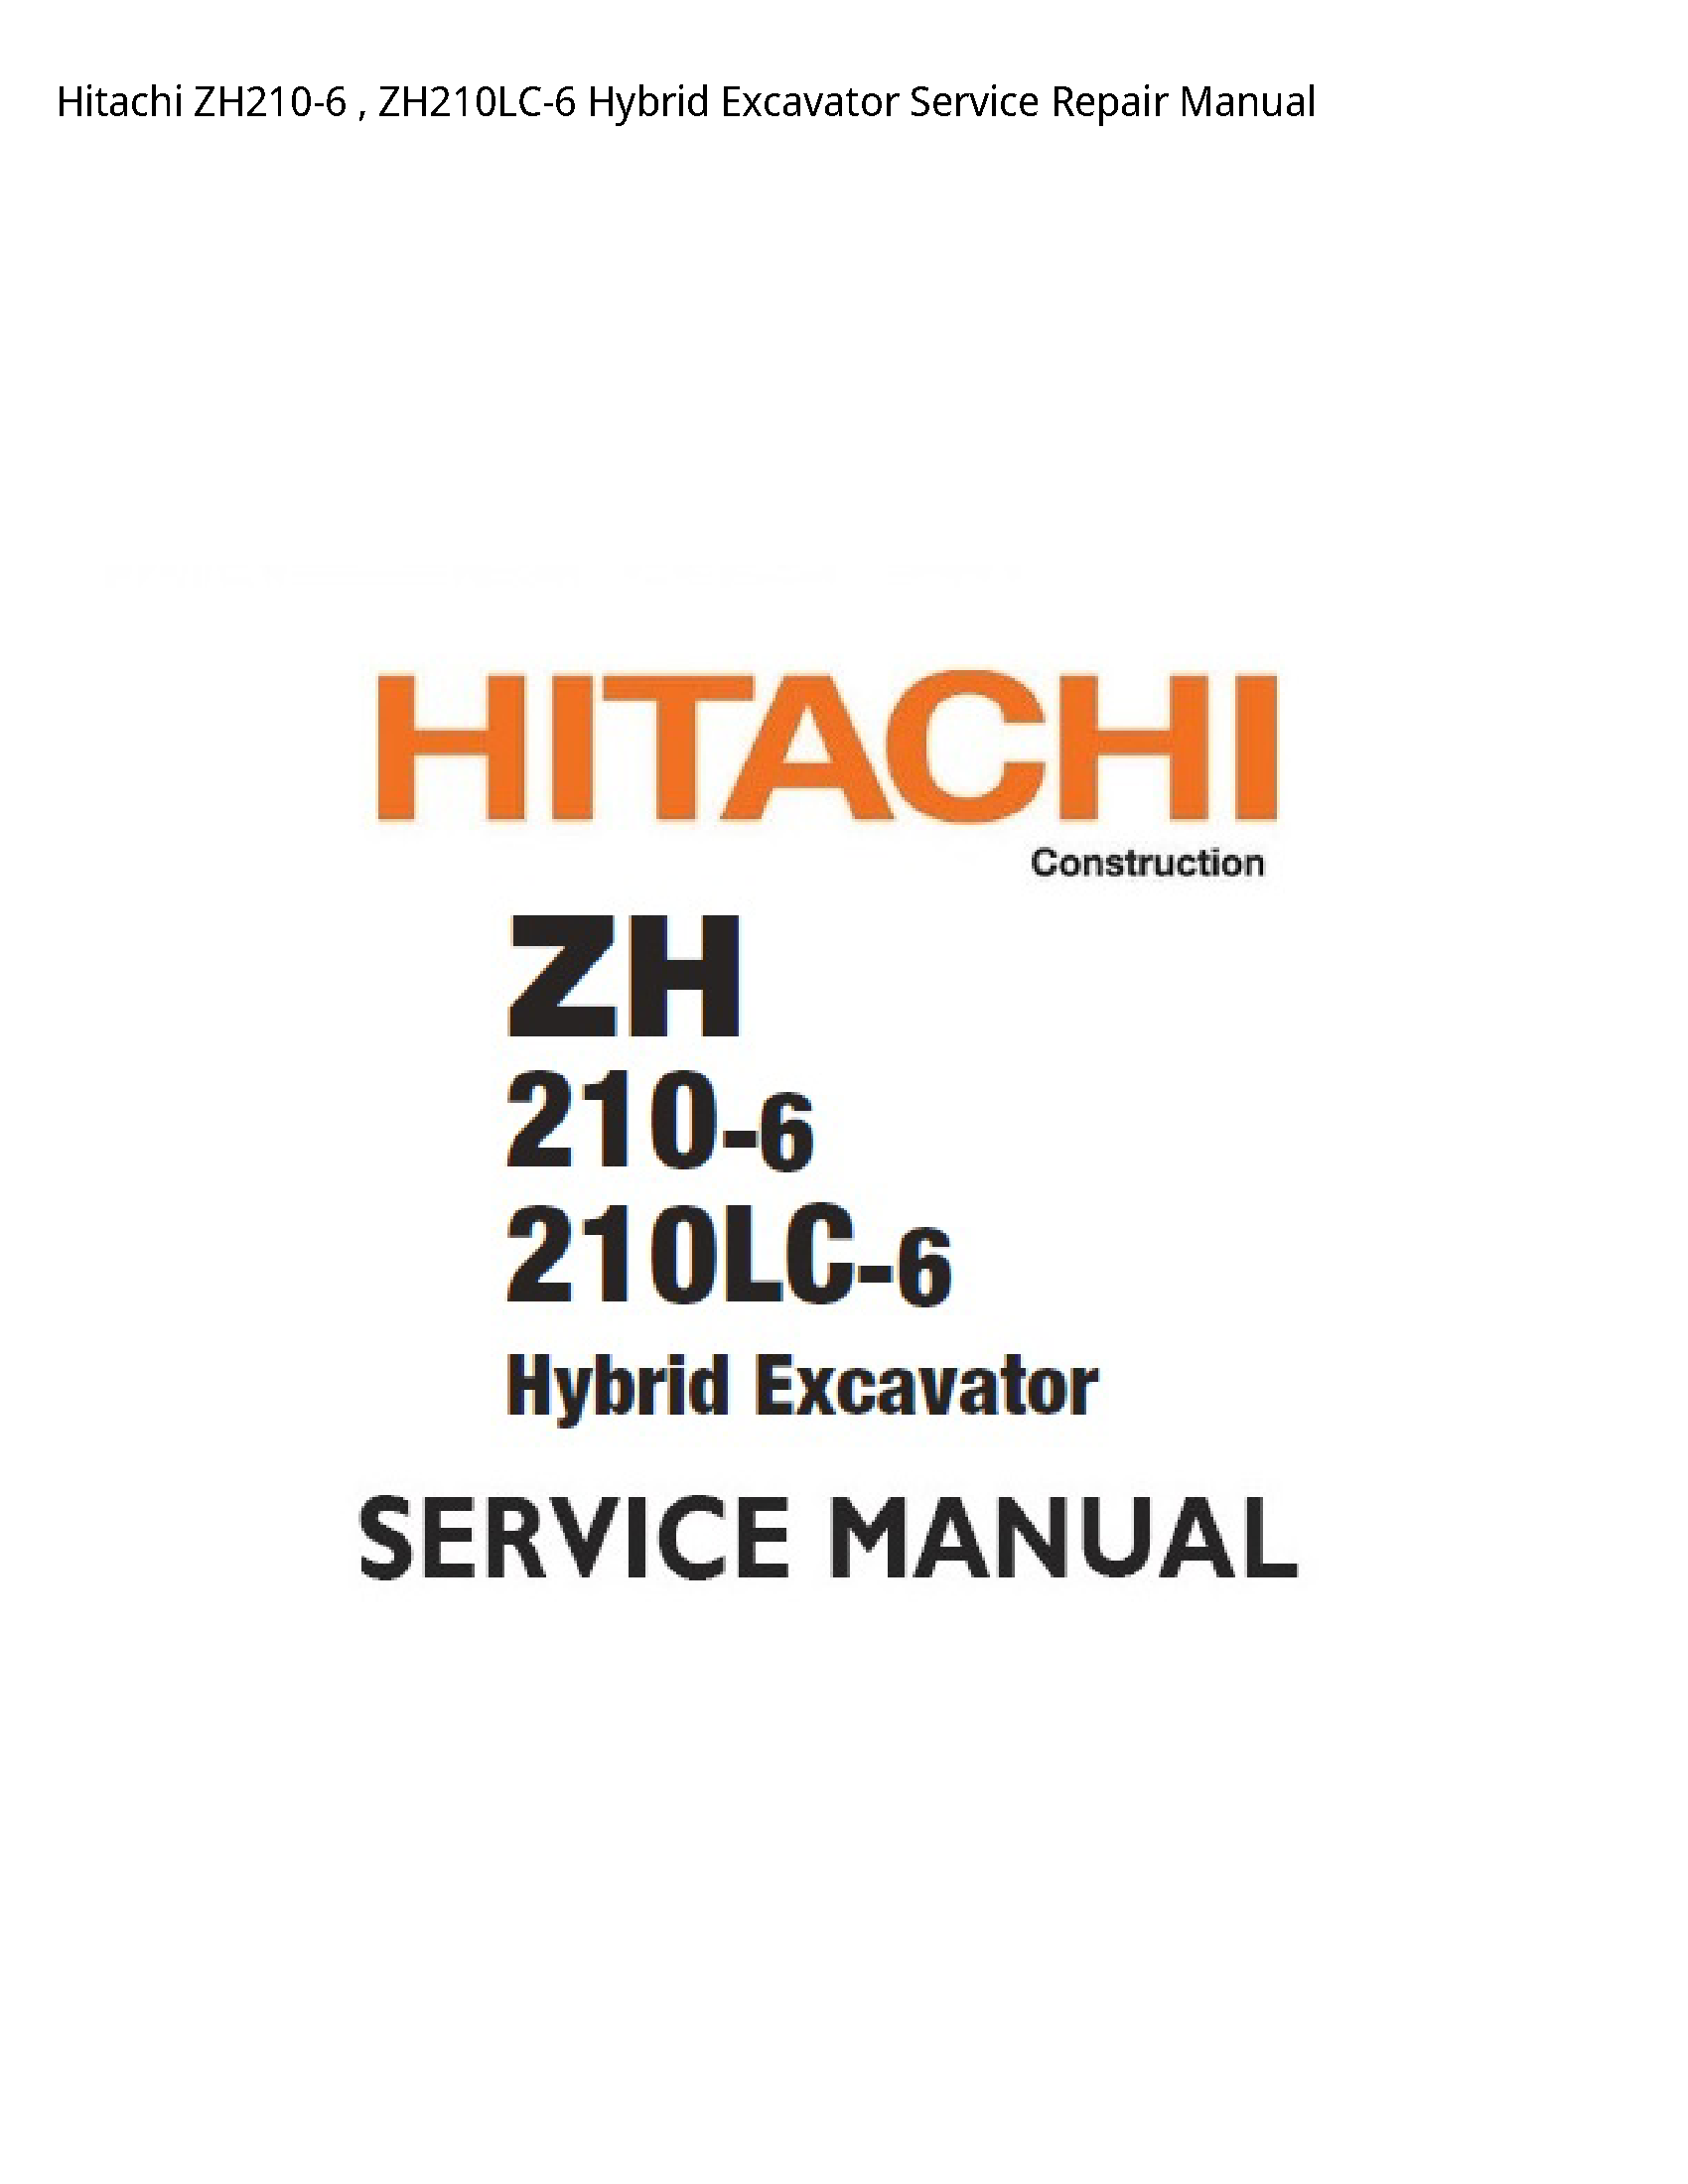 Hitachi ZH210-6 Hybrid Excavator manual